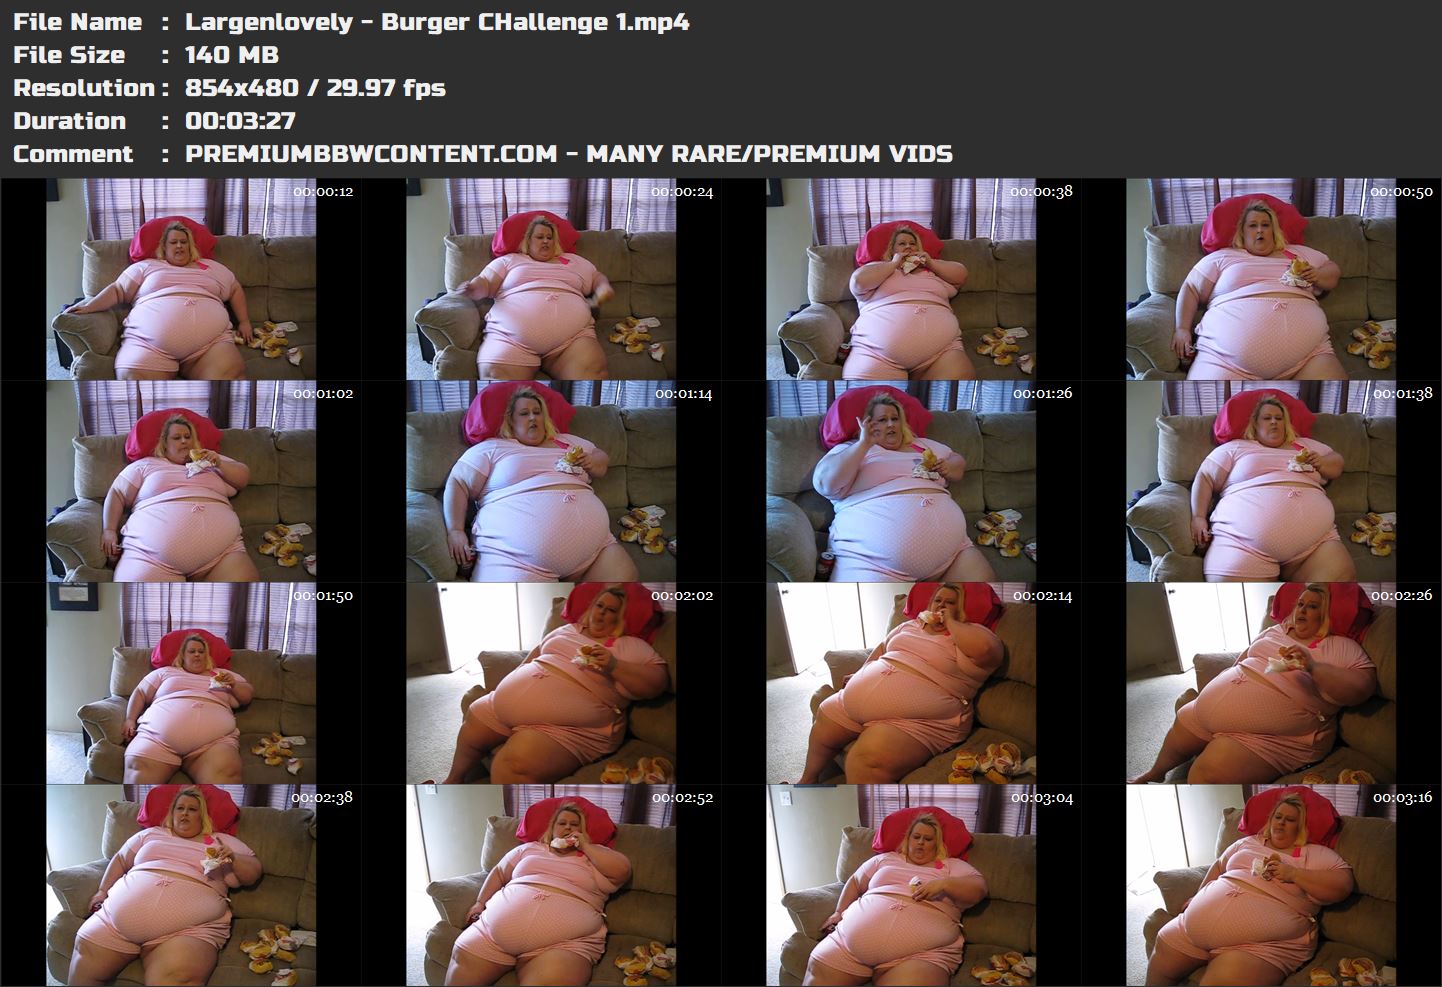 Largenlovely - Burger CHallenge 1 thumbnails